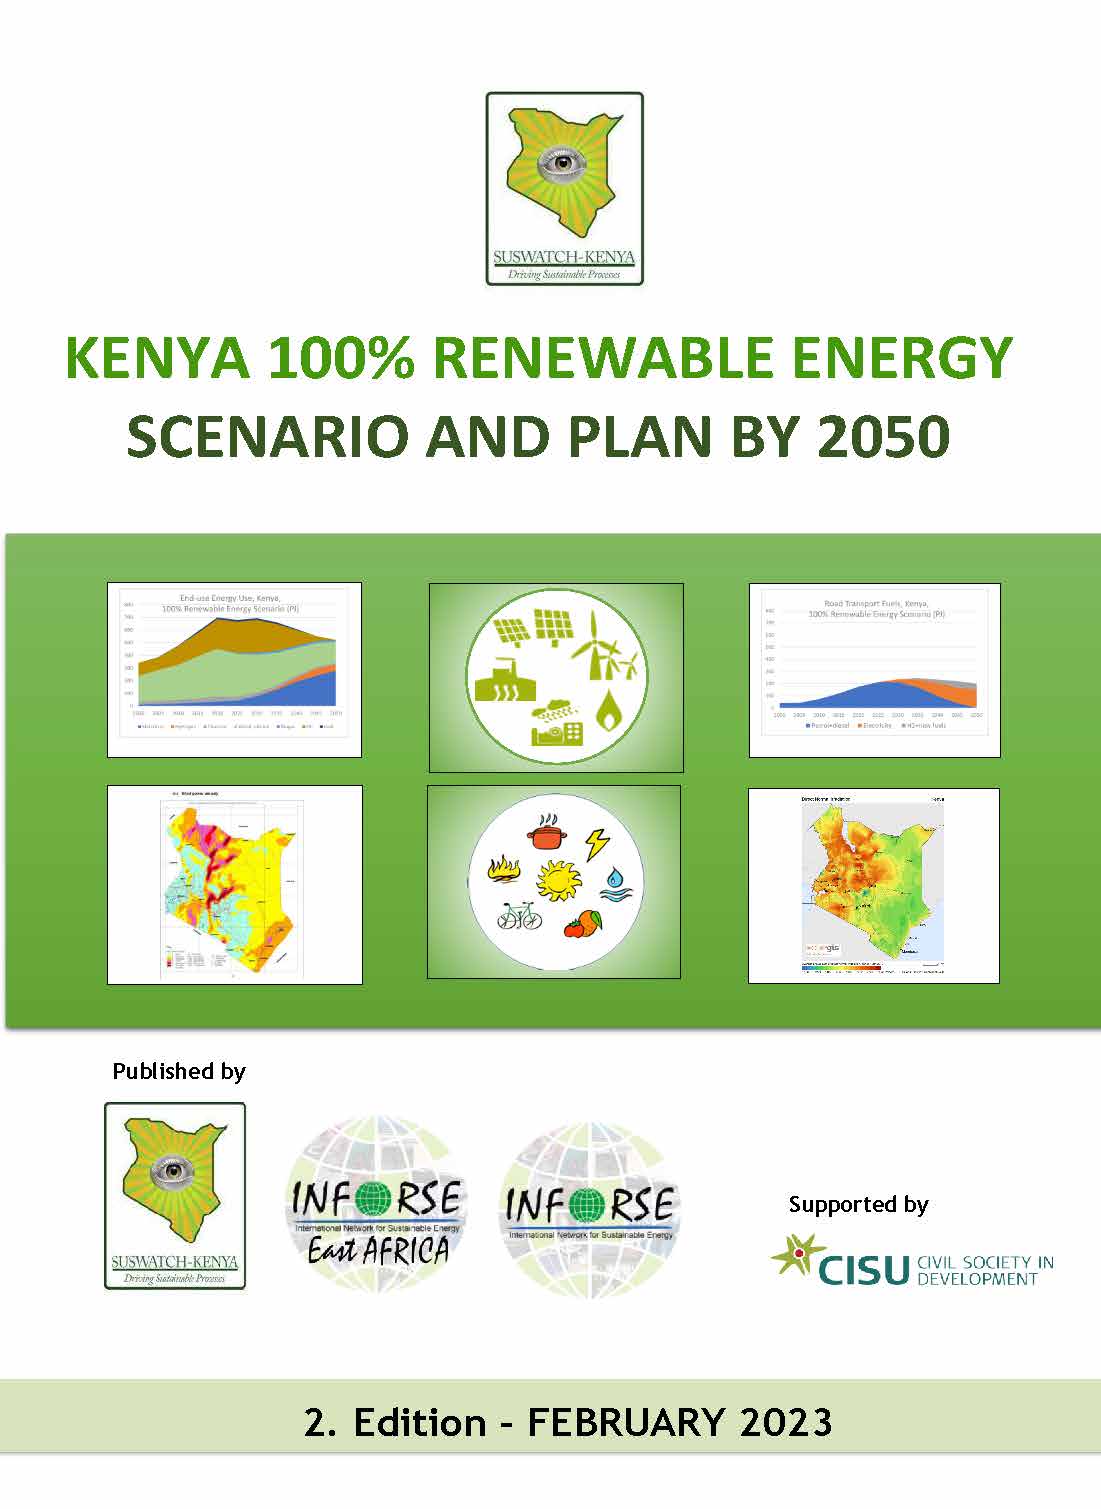 Update: Kenya 100% Renewable Energy Scenario & Plan by 2050